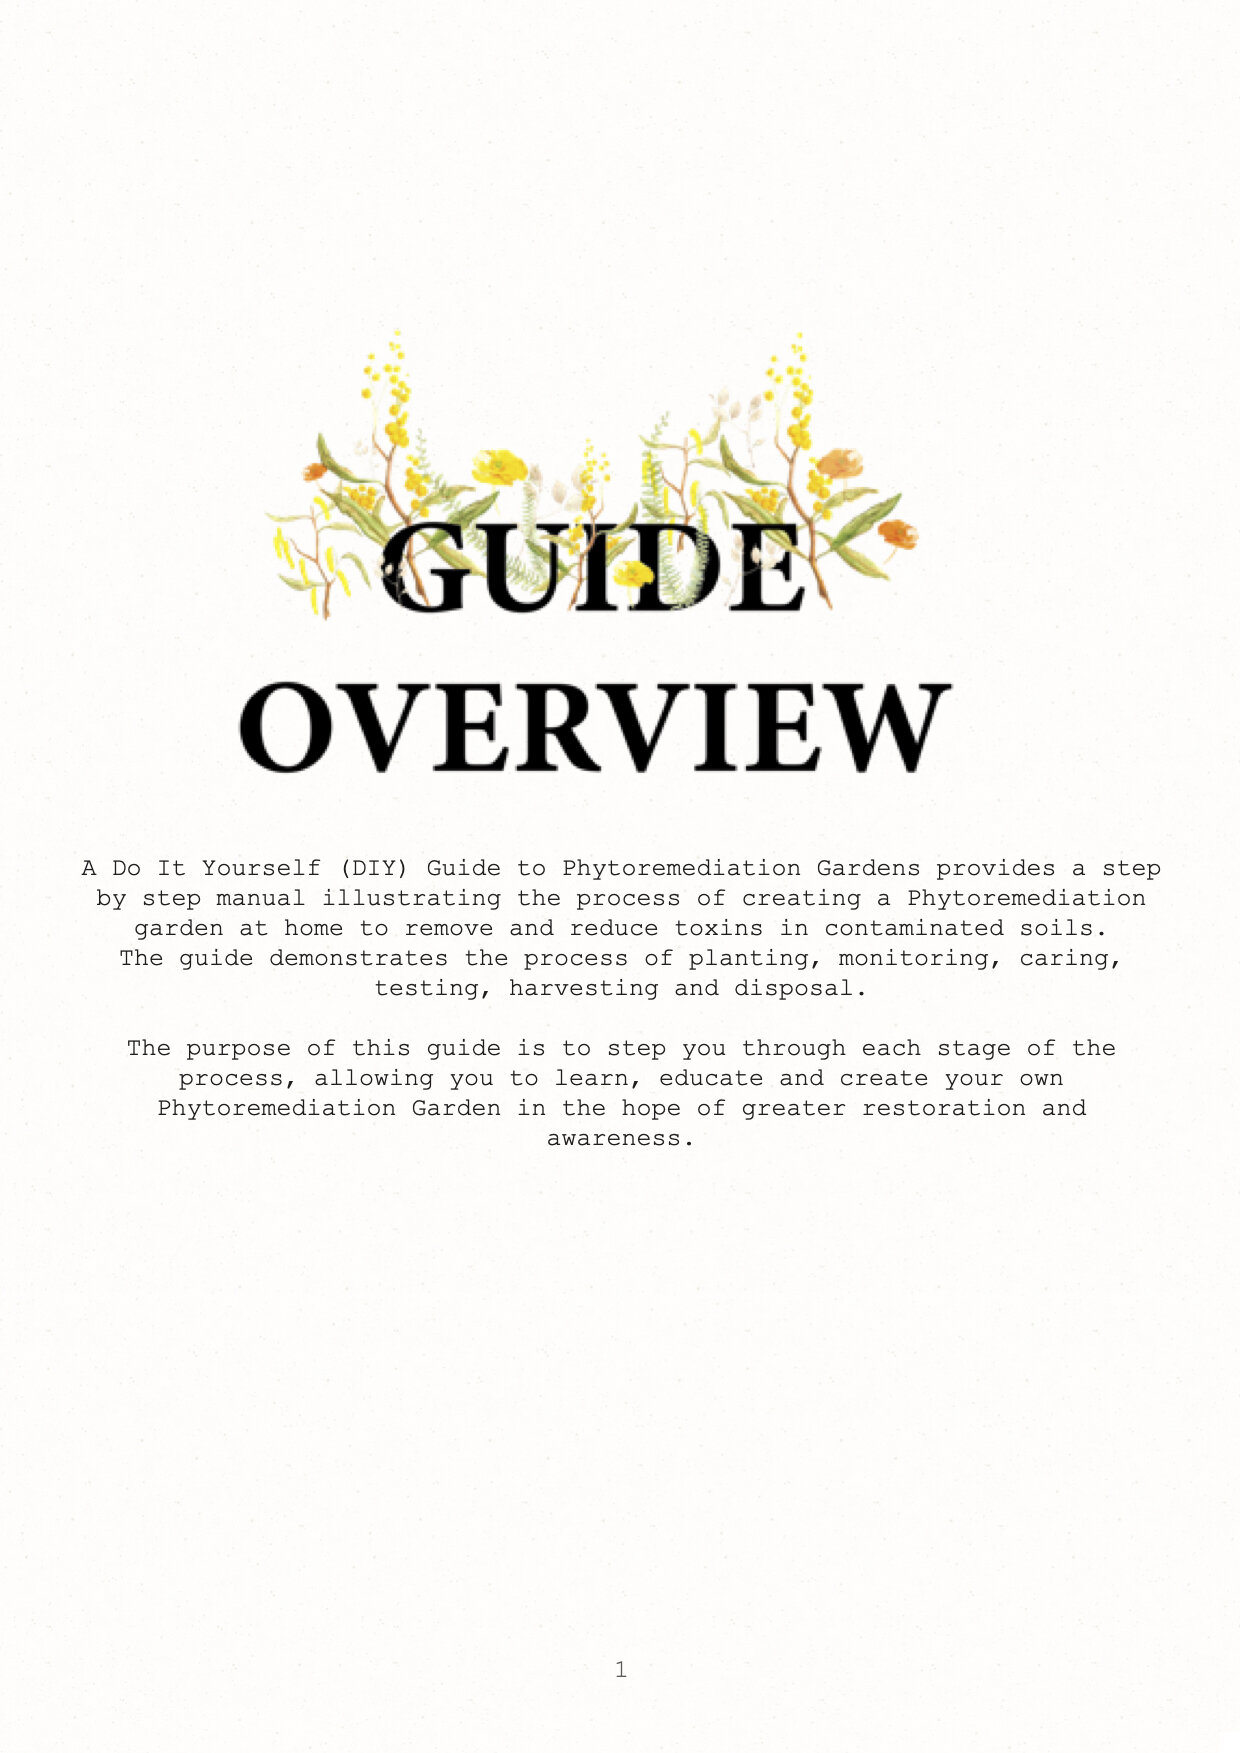 A-4DIY-Guide-To-Phytoremediation-Gardens-Regimes-Of-Care 2.jpg